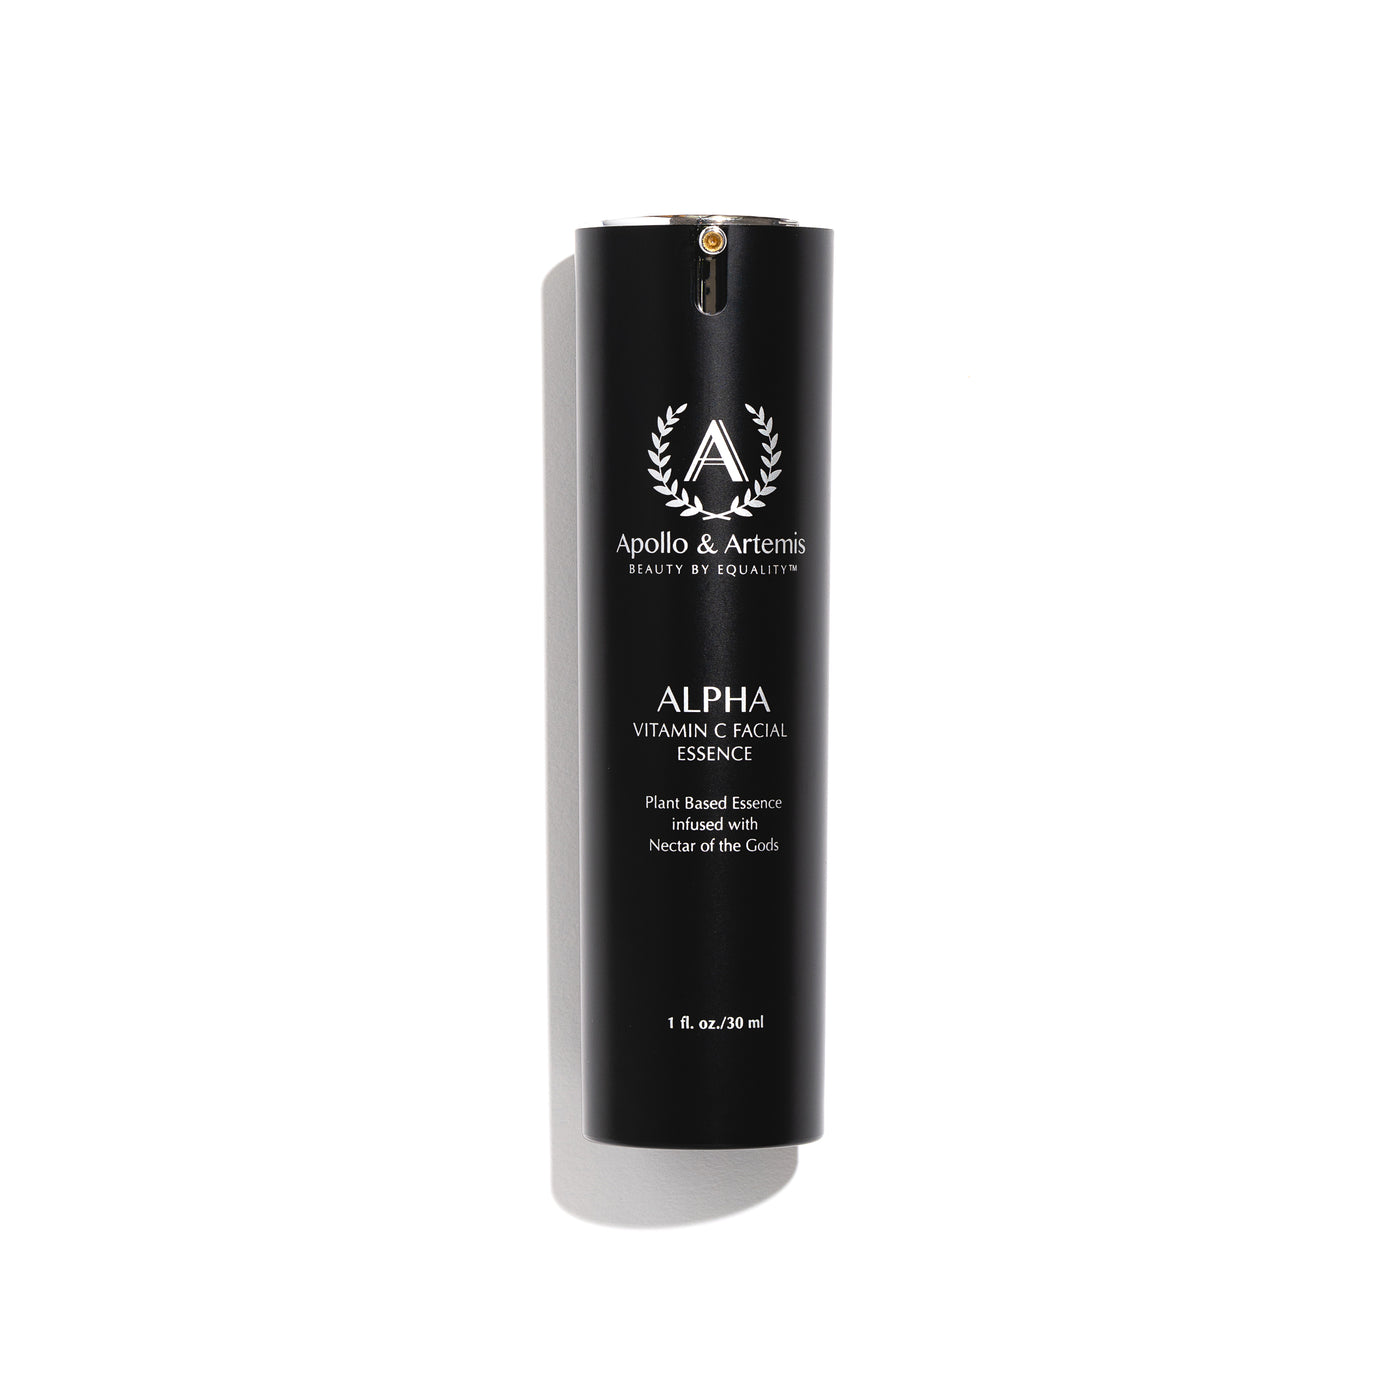 Apollo & Artemis Alpha Vitamin C Facial Essence